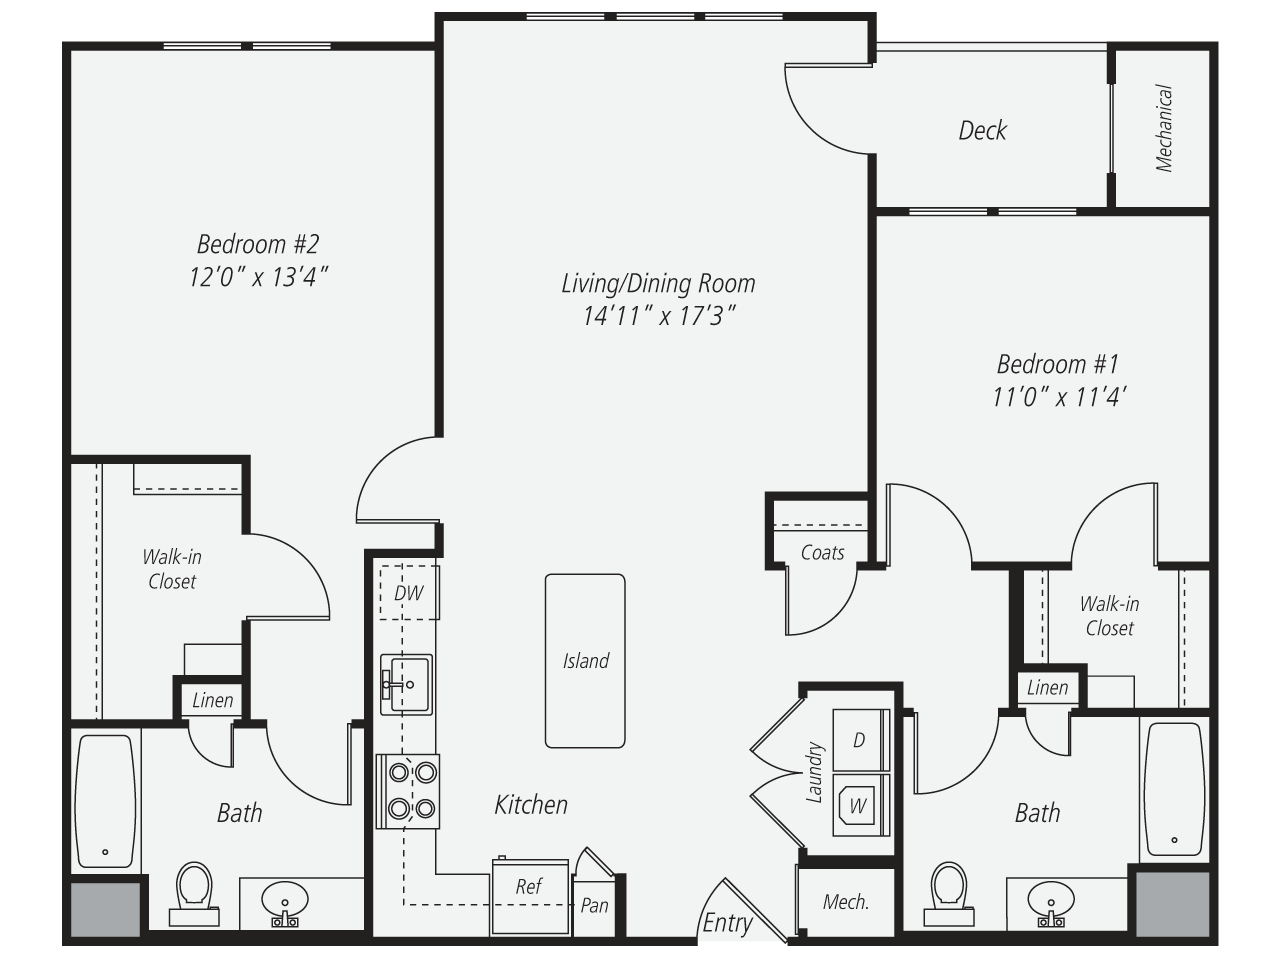 Floorplan for Apartment #304, 2 bedroom unit at Halstead Norwalk